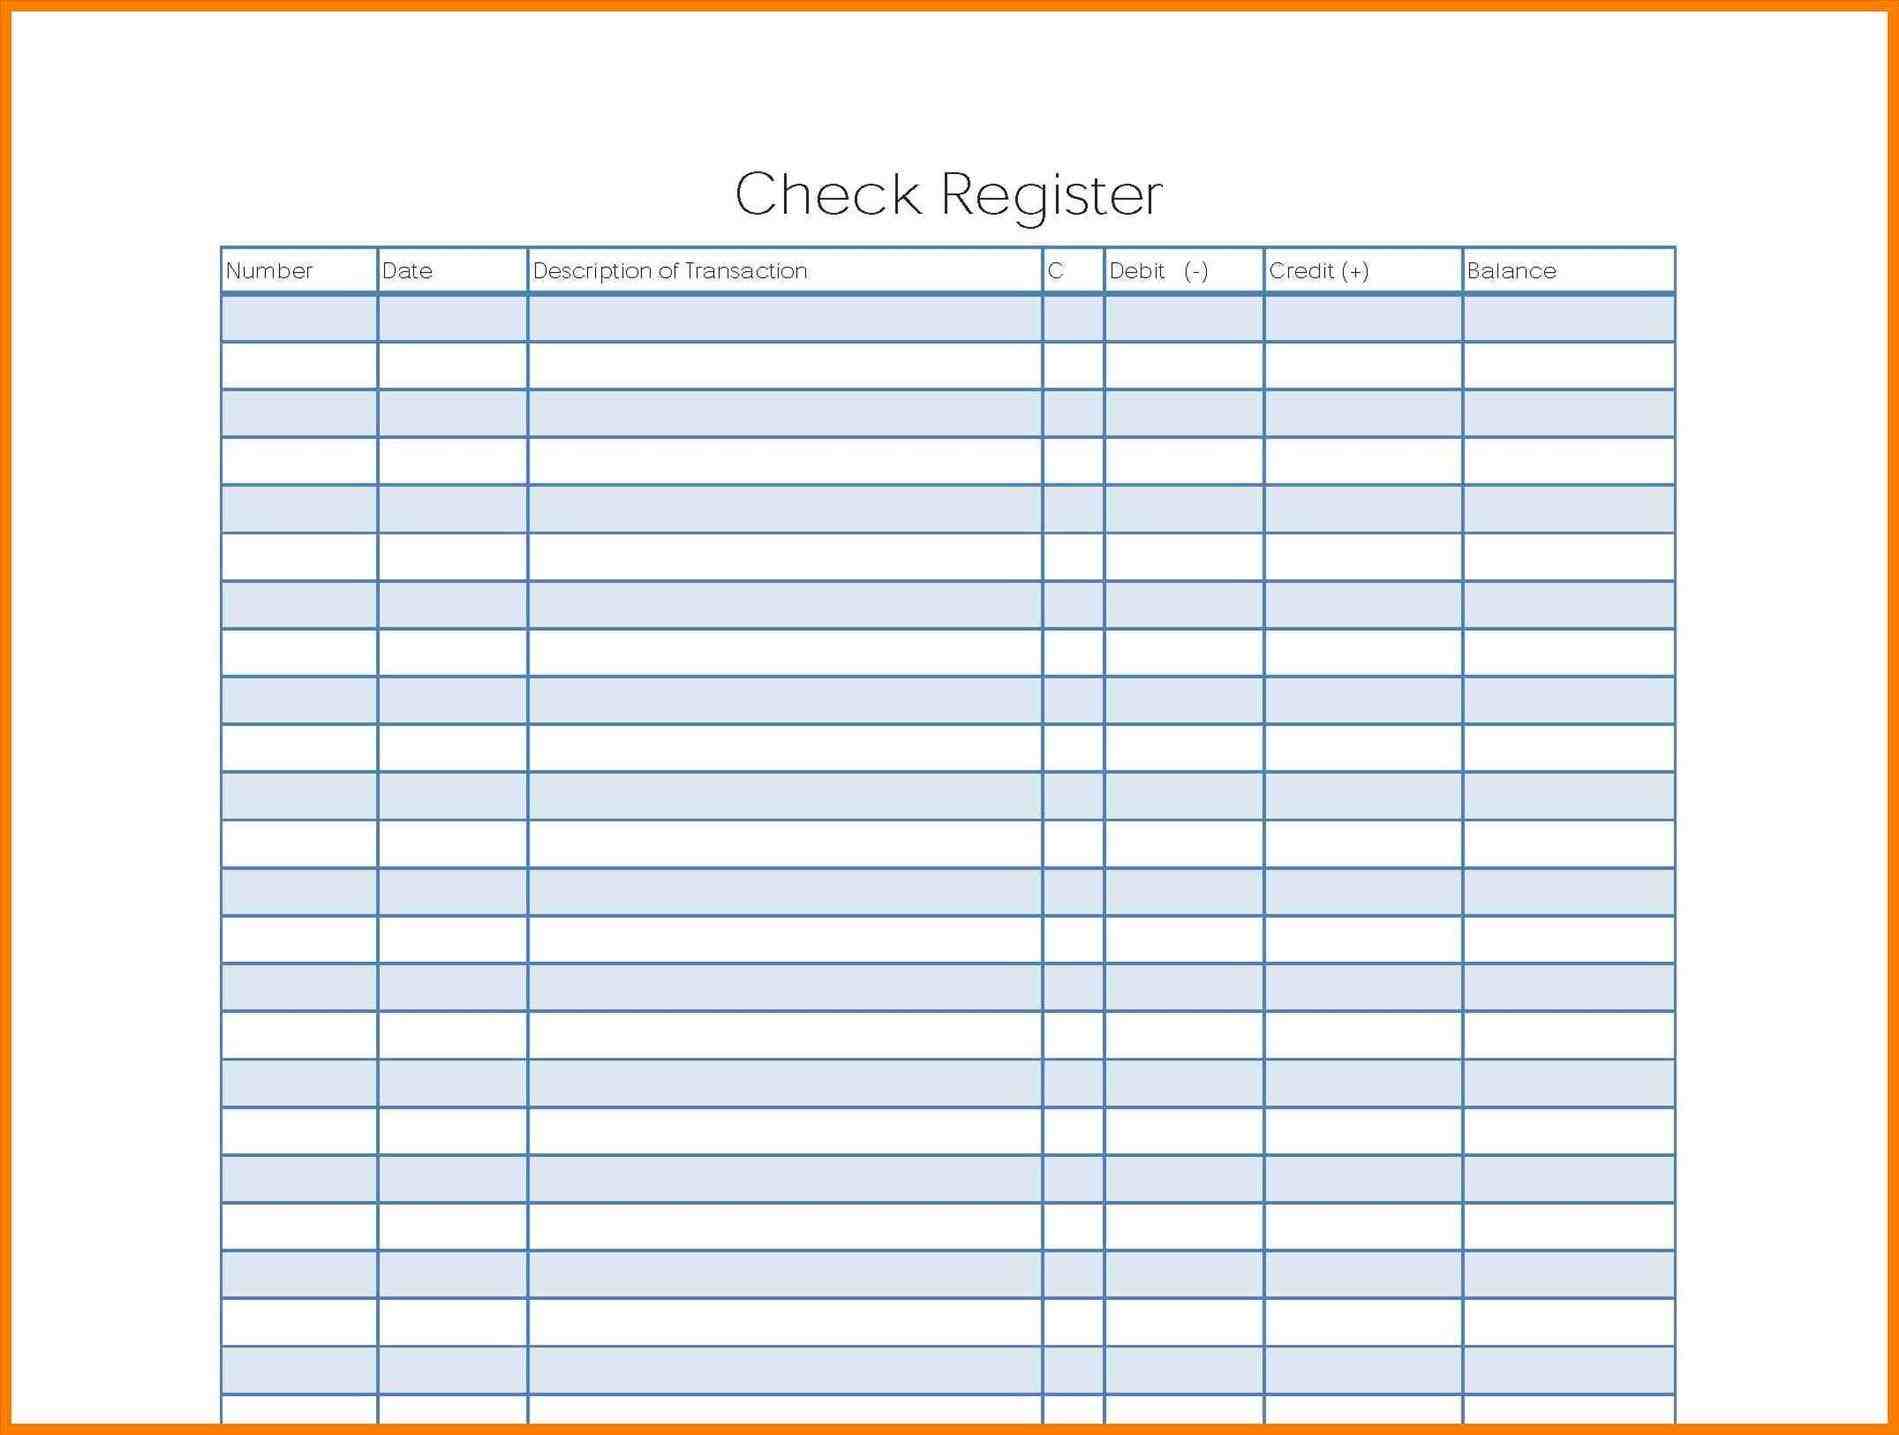 checkbook Check Register Balance Sheet balance sheet xavierax register count commonpenceco register Check Register Balance Sheet count sheet commonpenceco